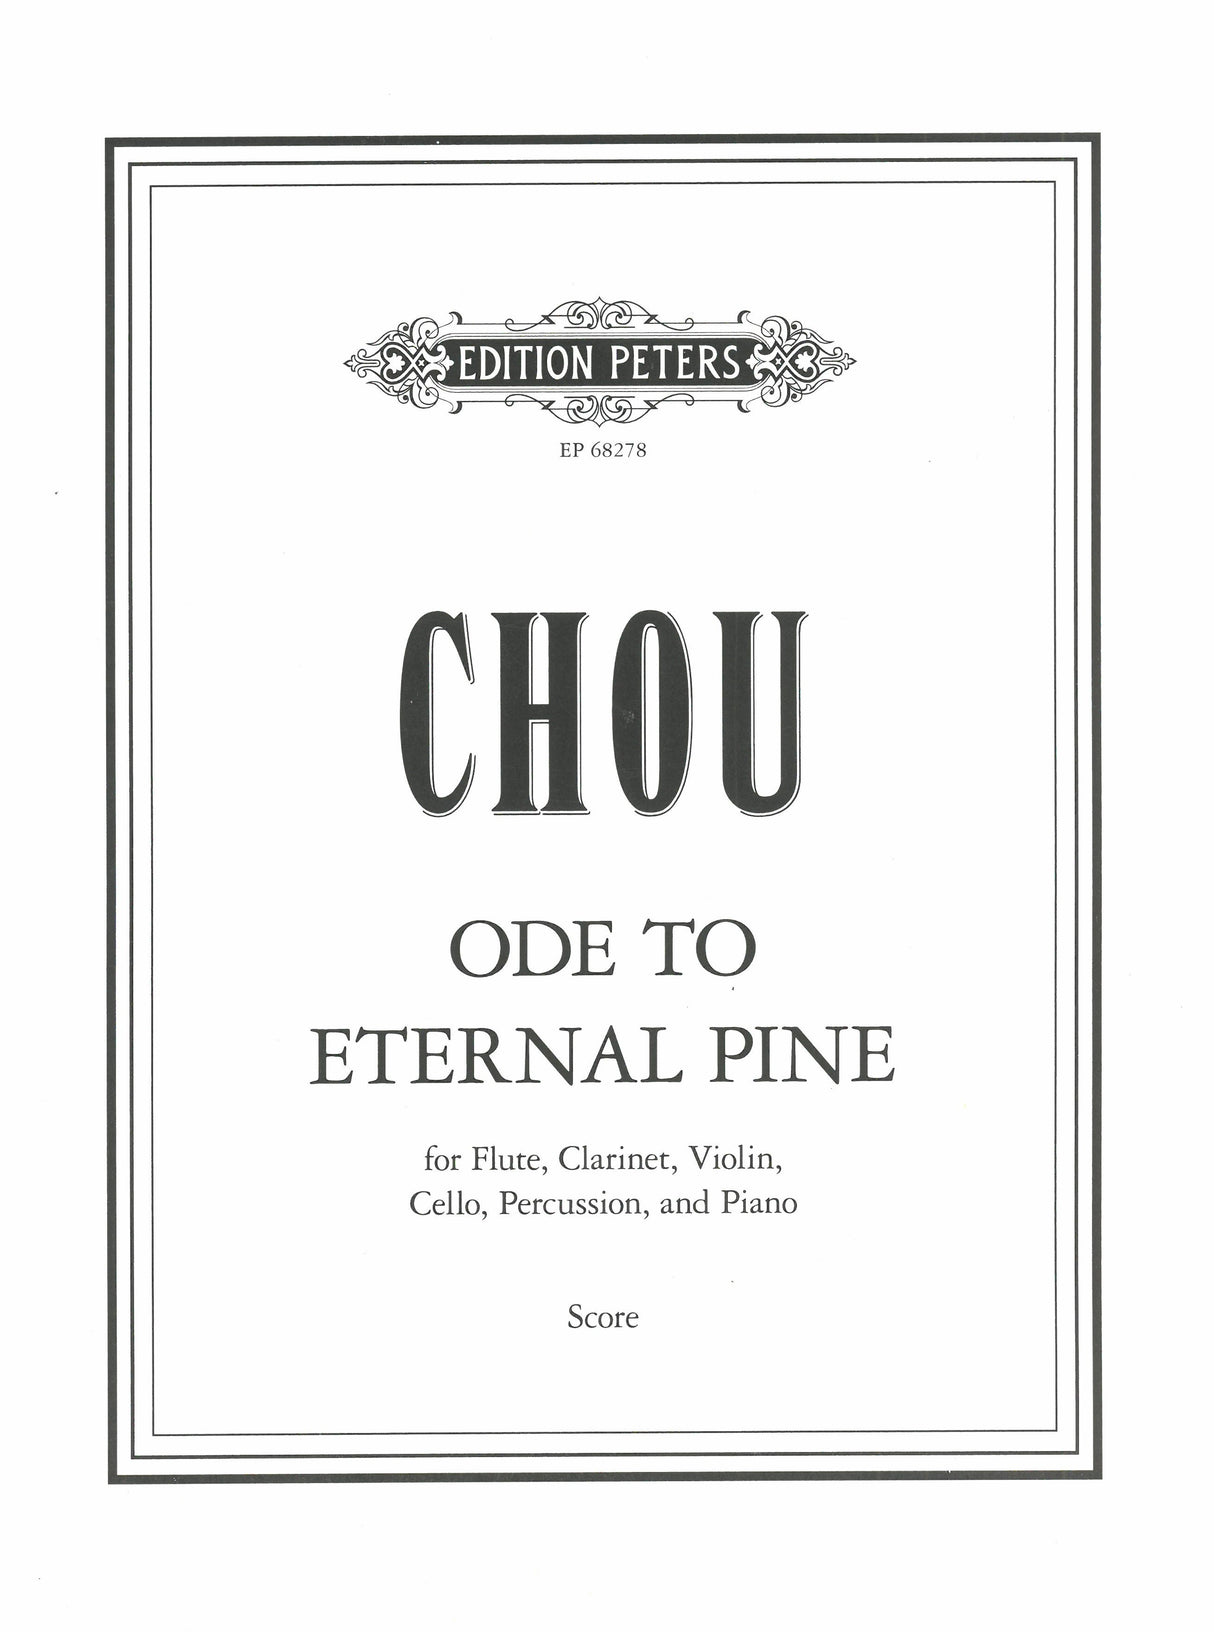 Chou: Ode to Eternal Pine